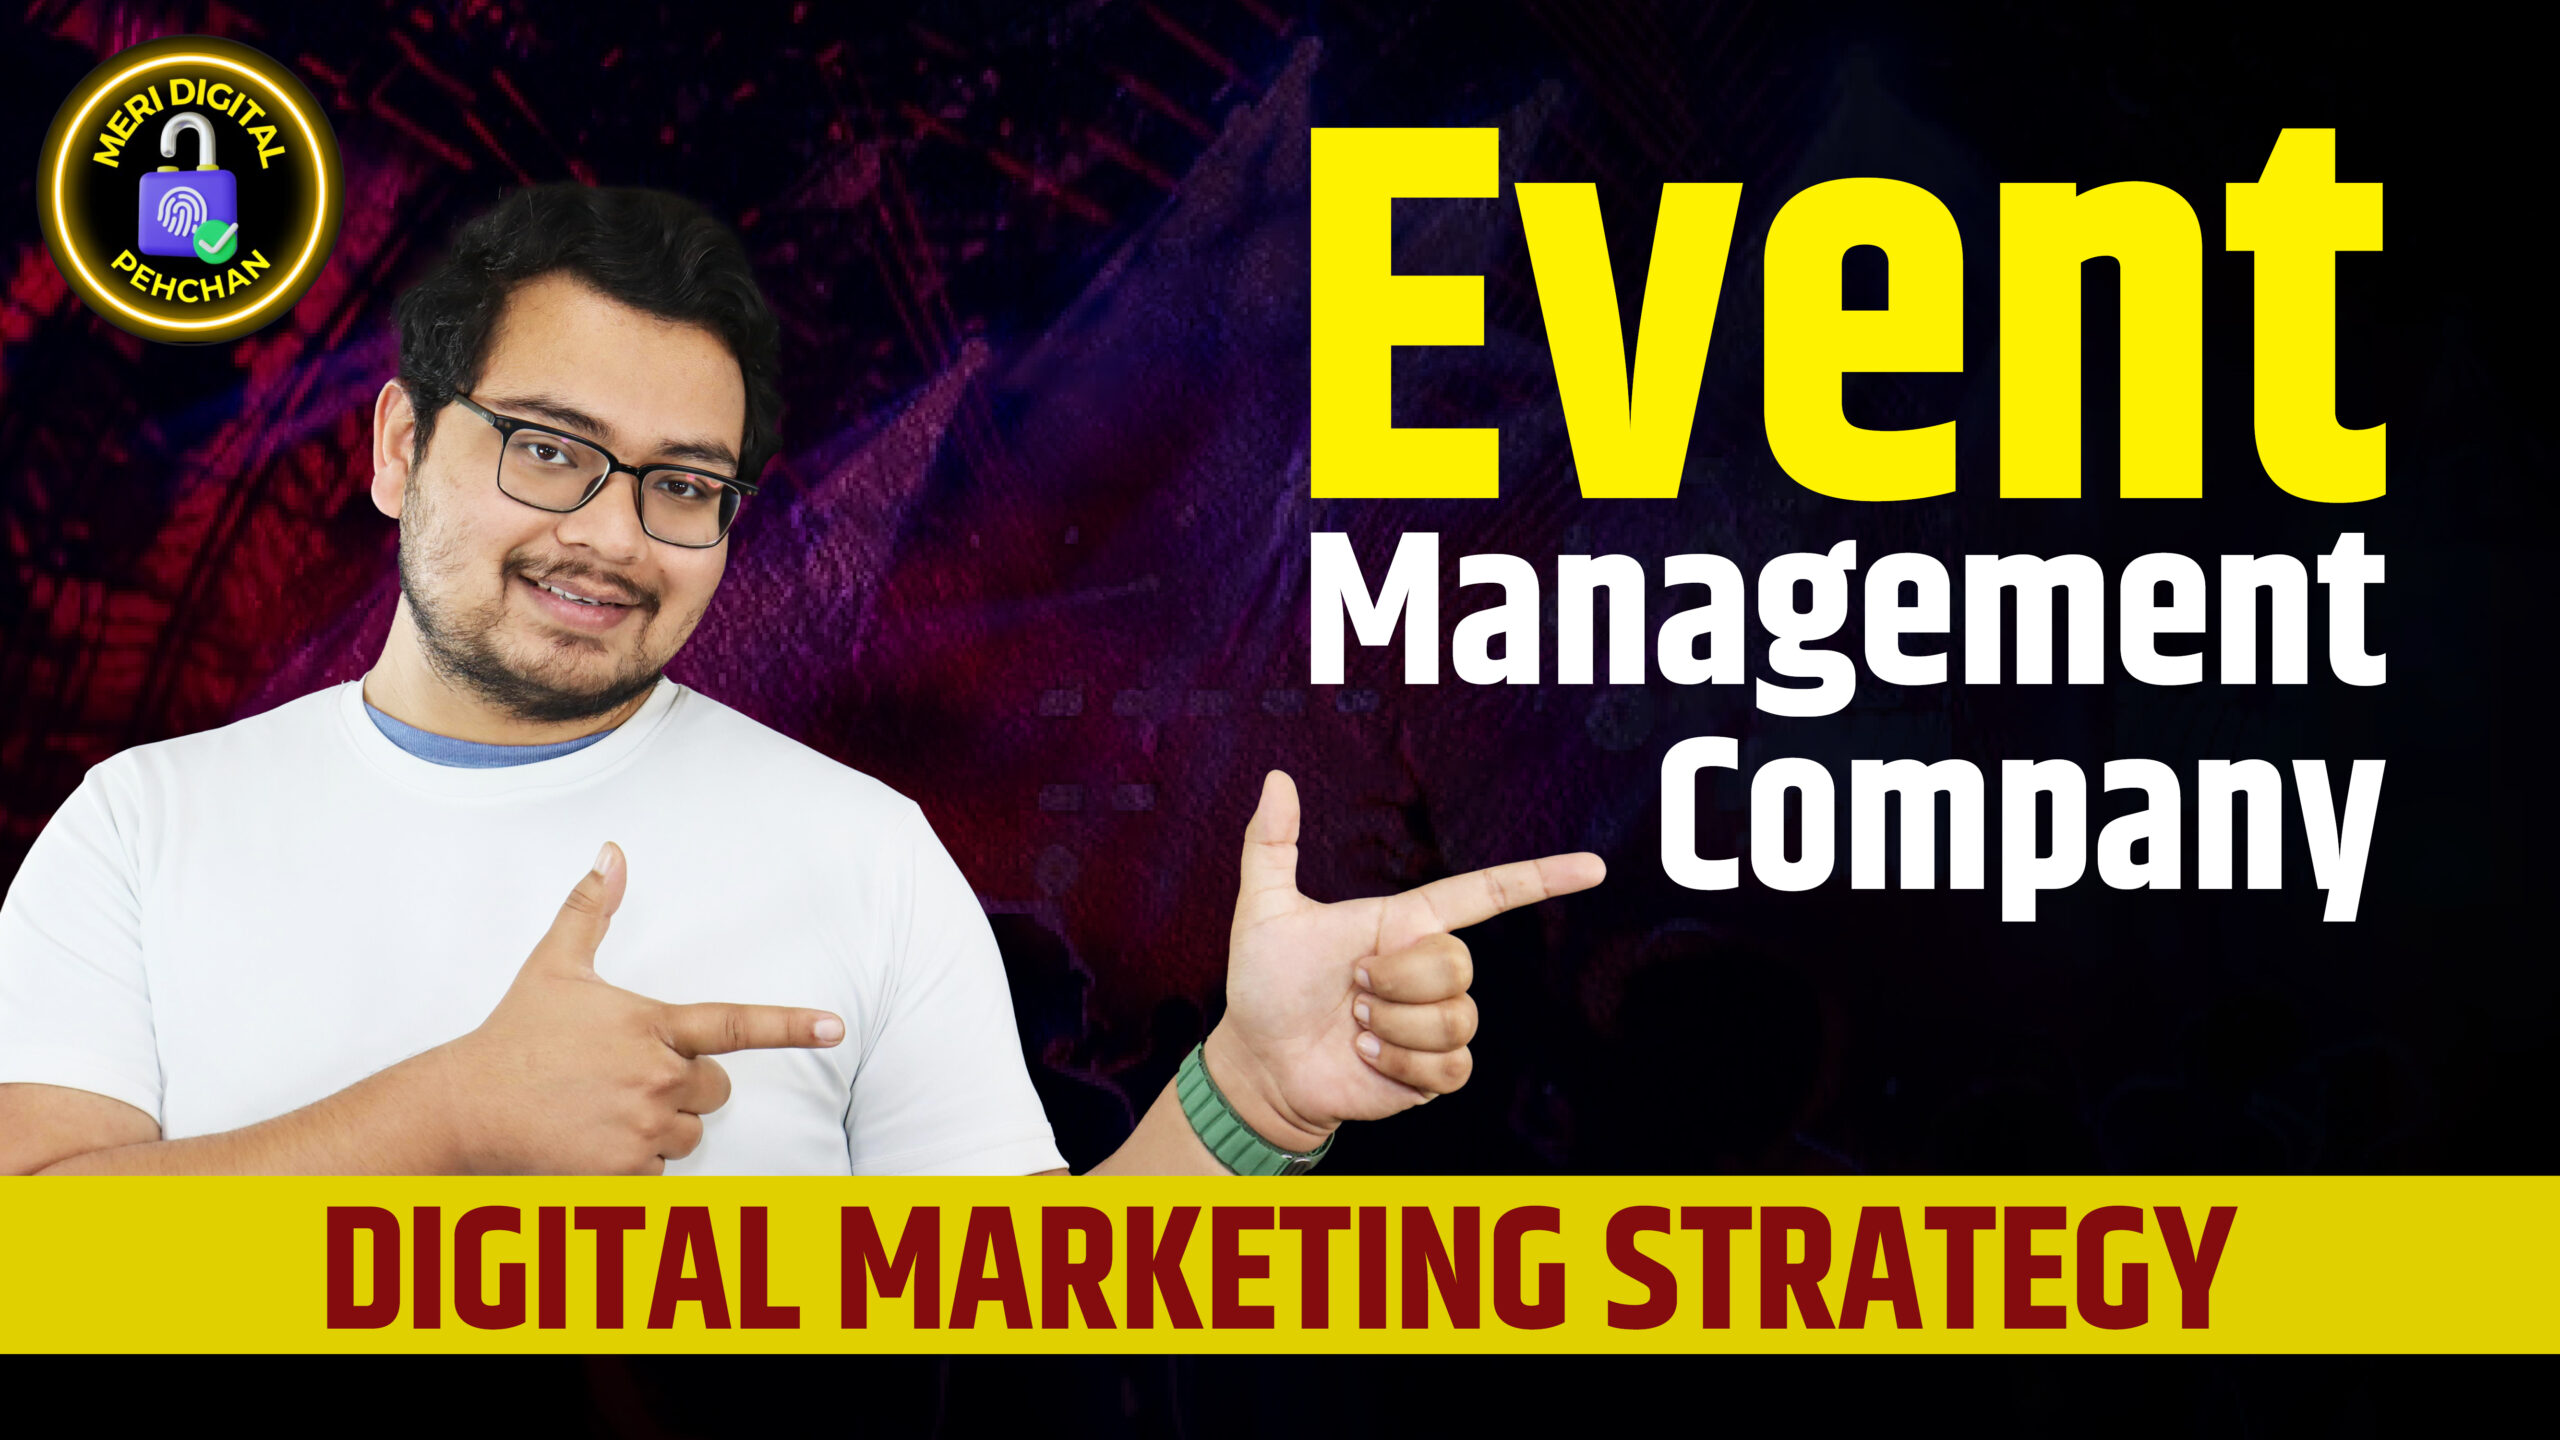 Event Management Company Digital Marketing Strategy